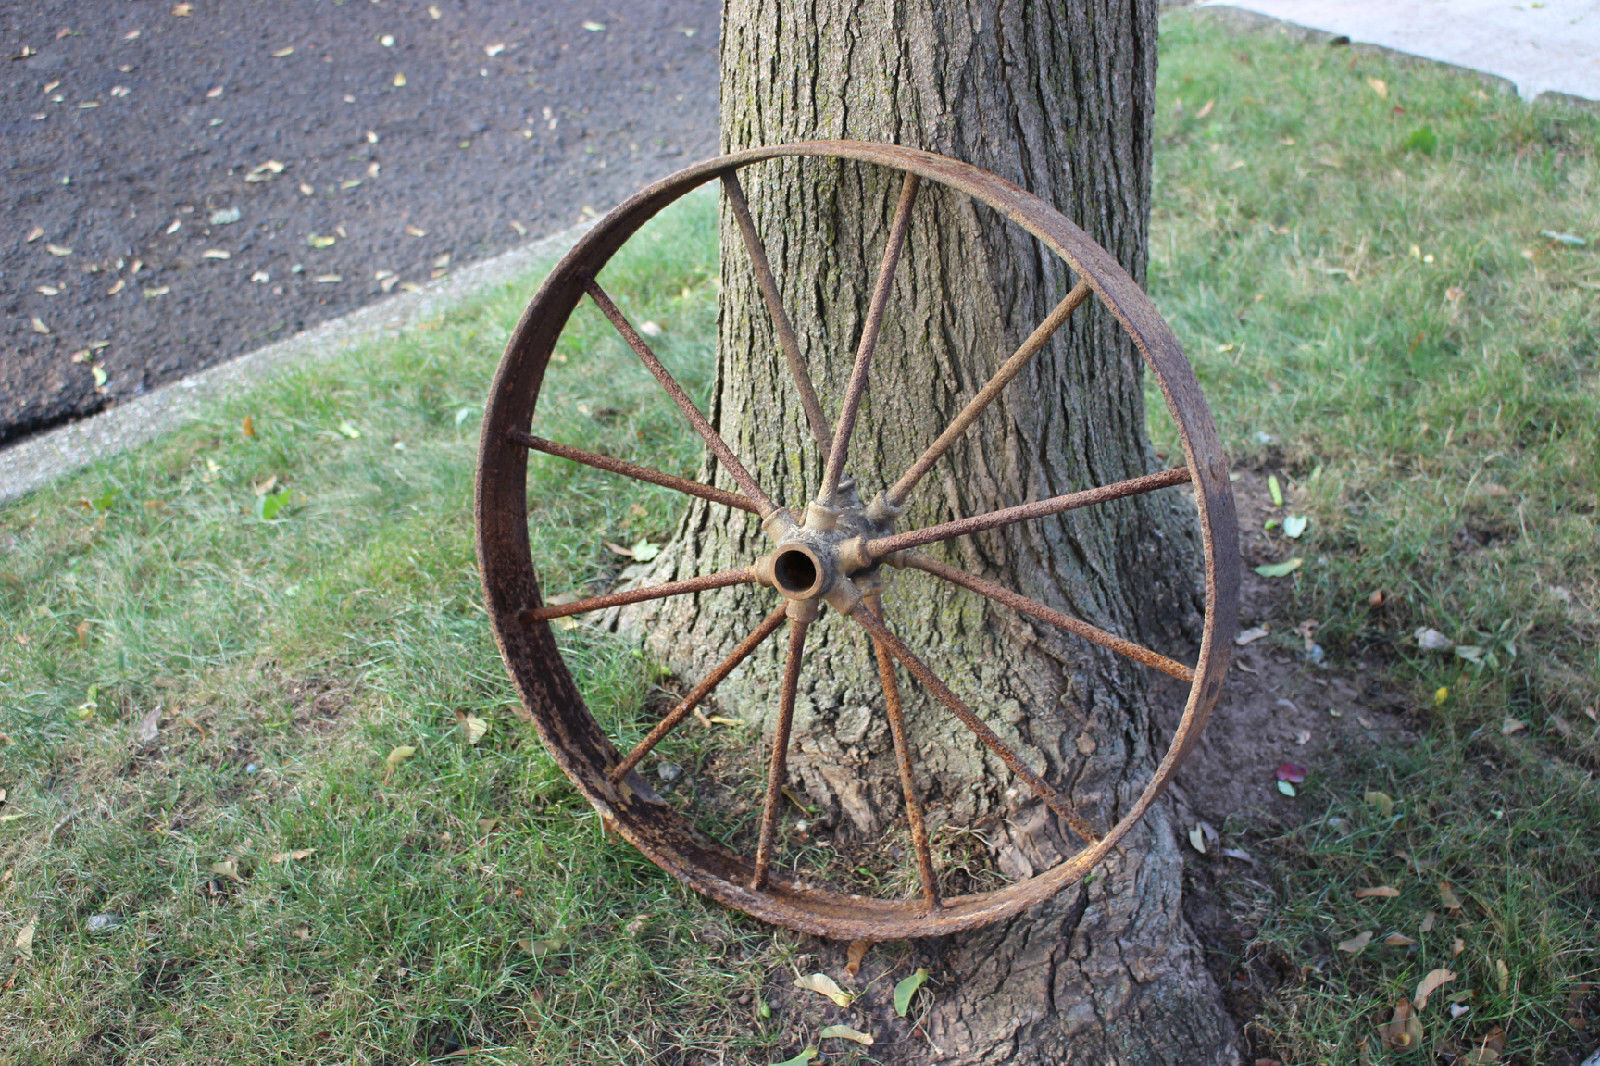 Antique Wagon Buggy Automobile Wheel 12 Spoke Iron 25 3/4" Tall #2 Country Decor